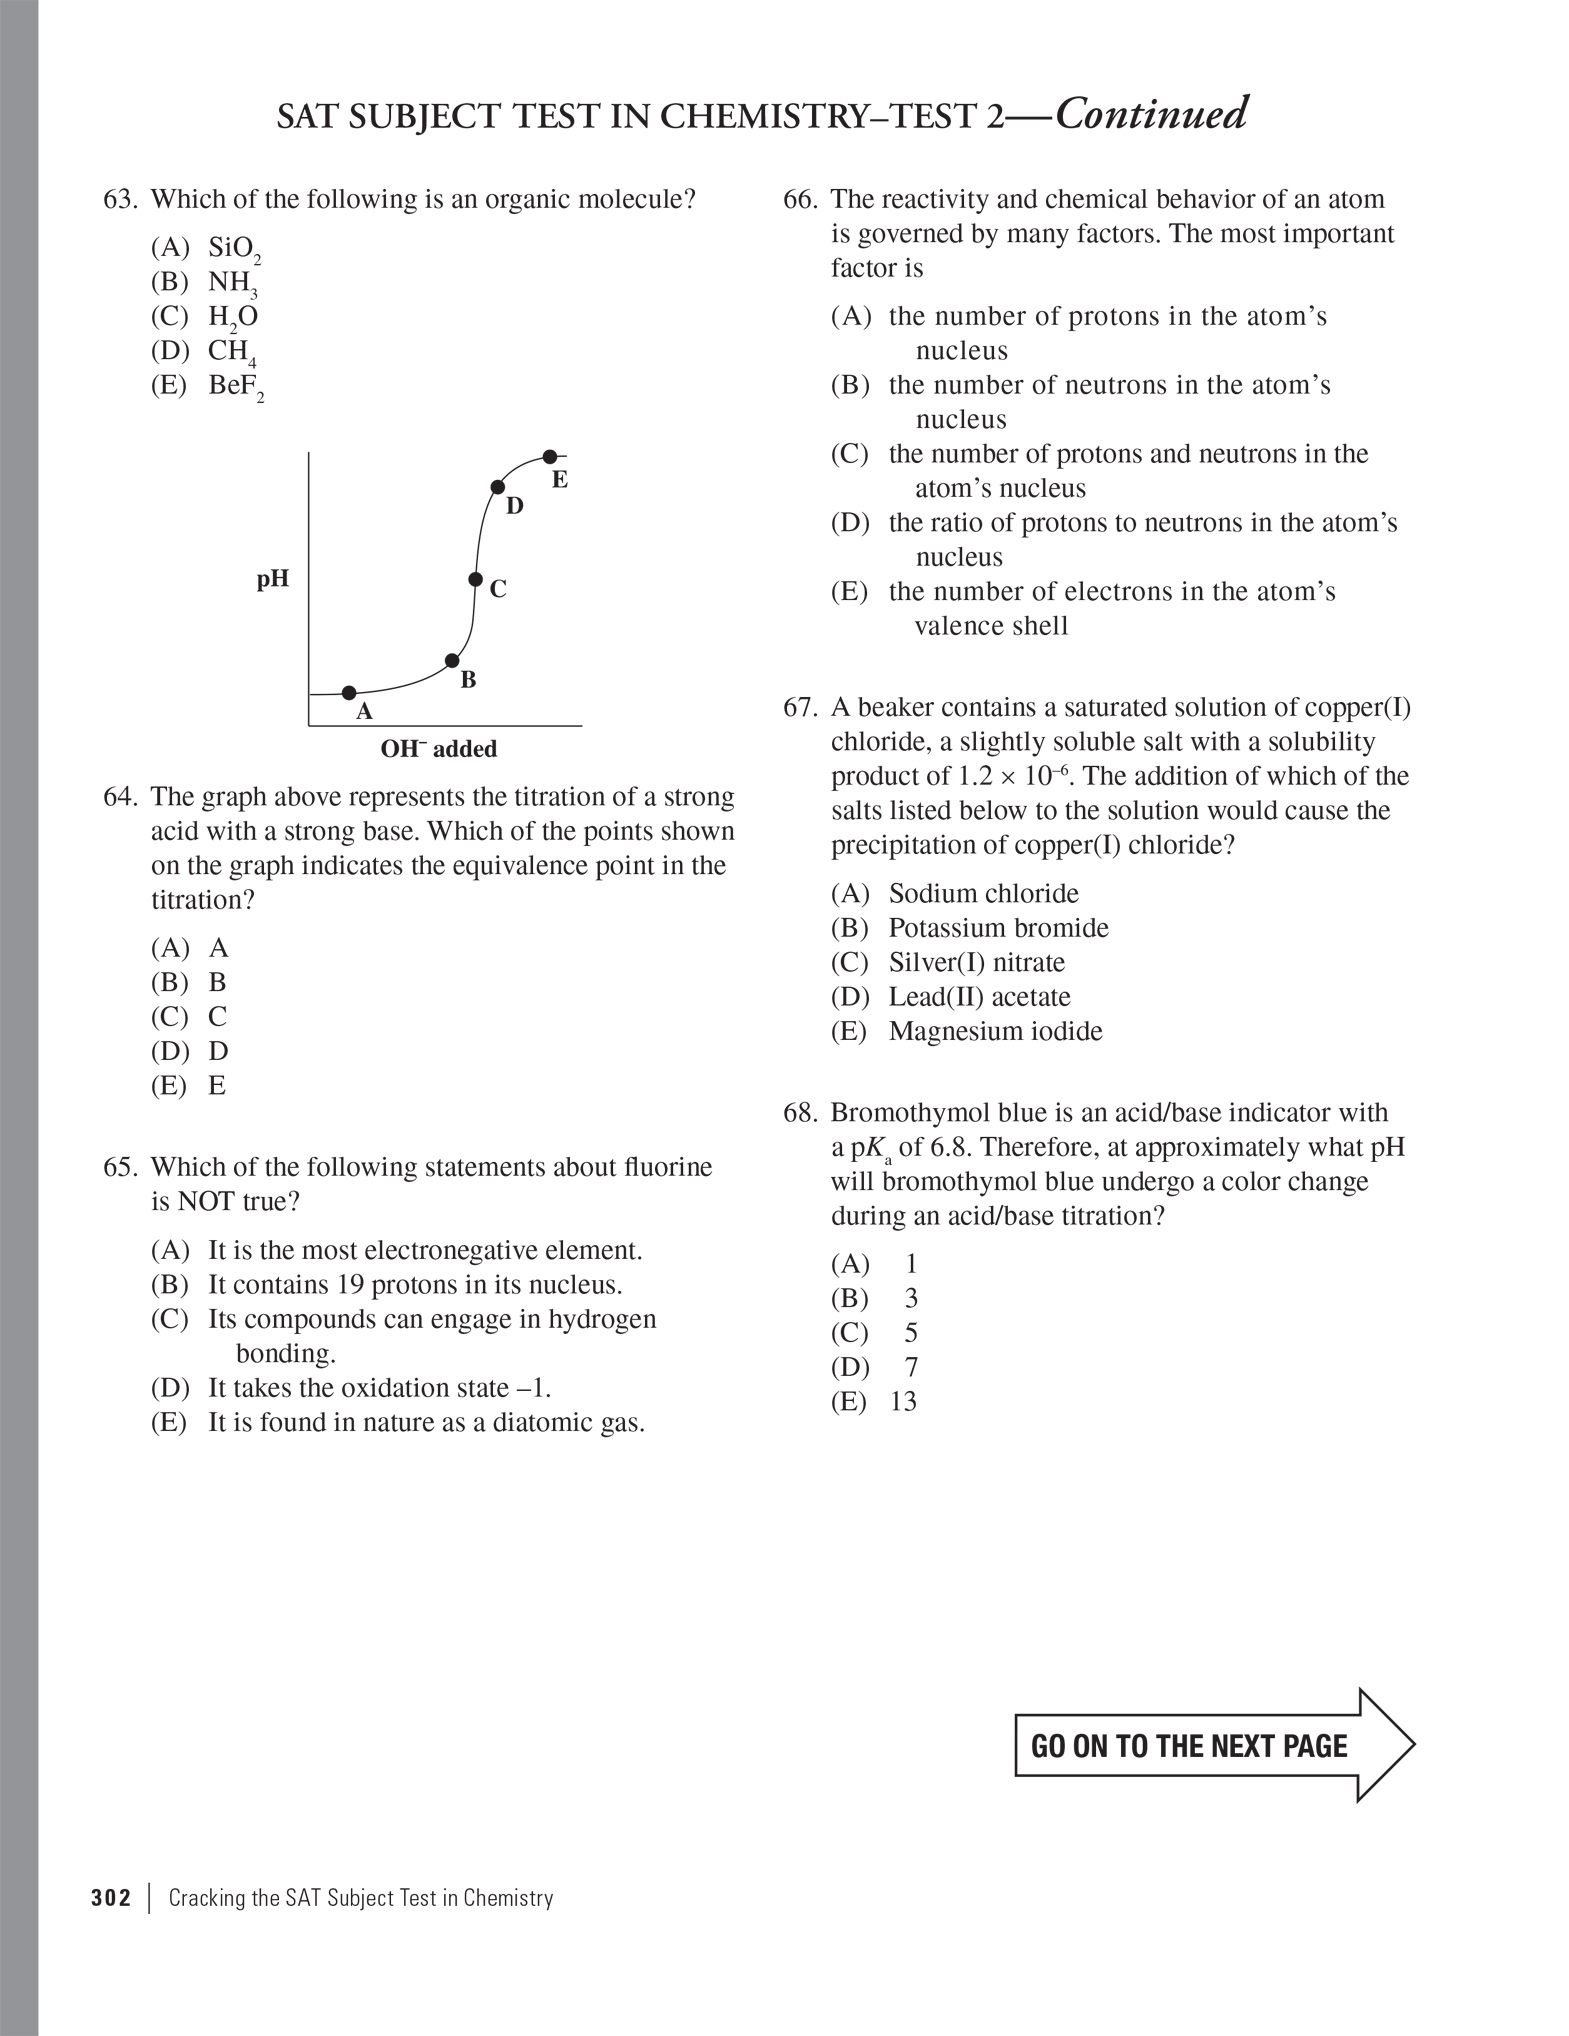 sat chemistry subject test study guide pdf